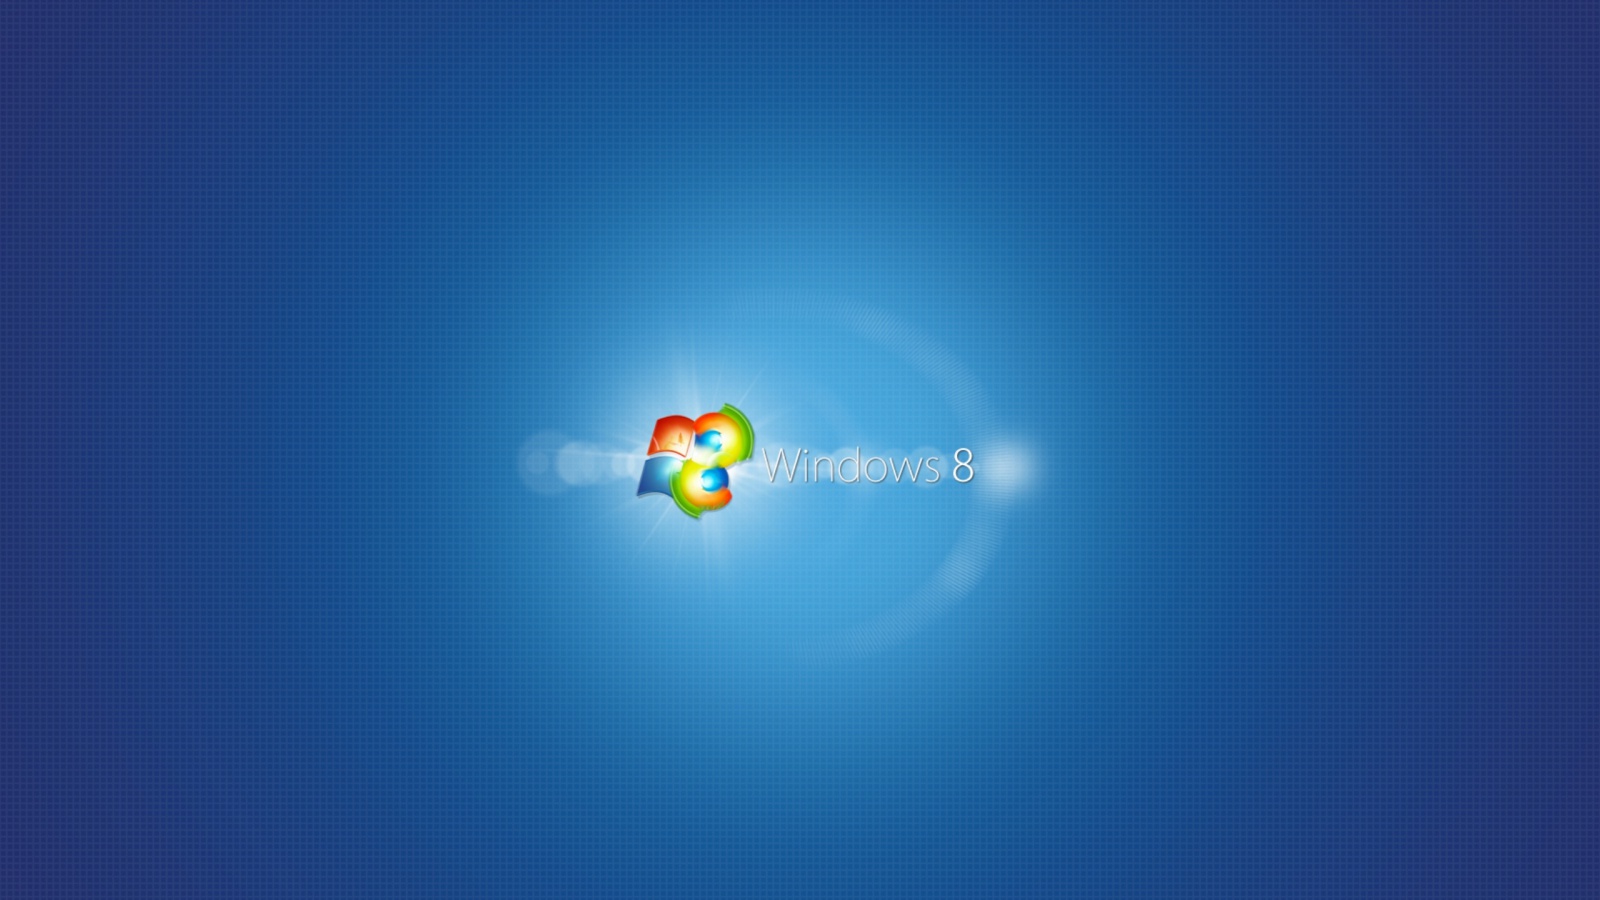 Windows New Look Wallpaper Desktop Background In HD